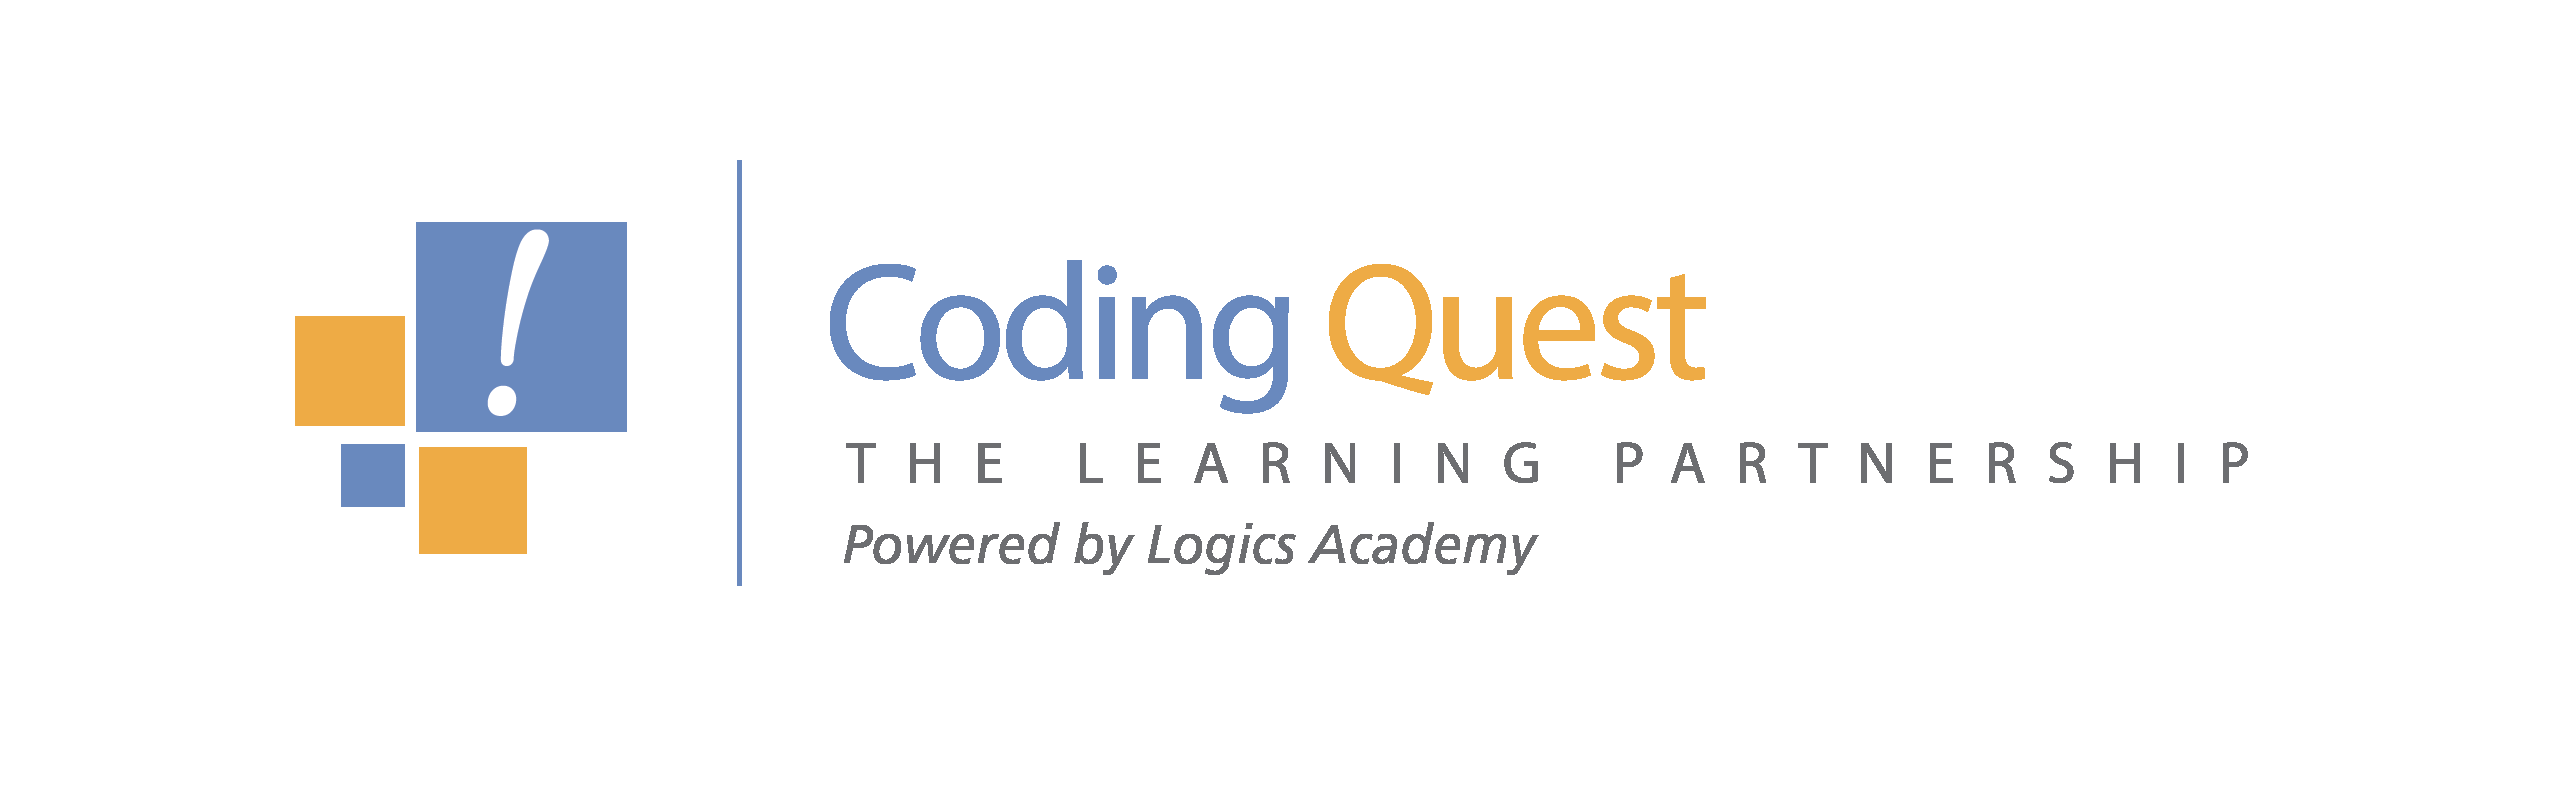 Coding Quest Program | Logics Academy